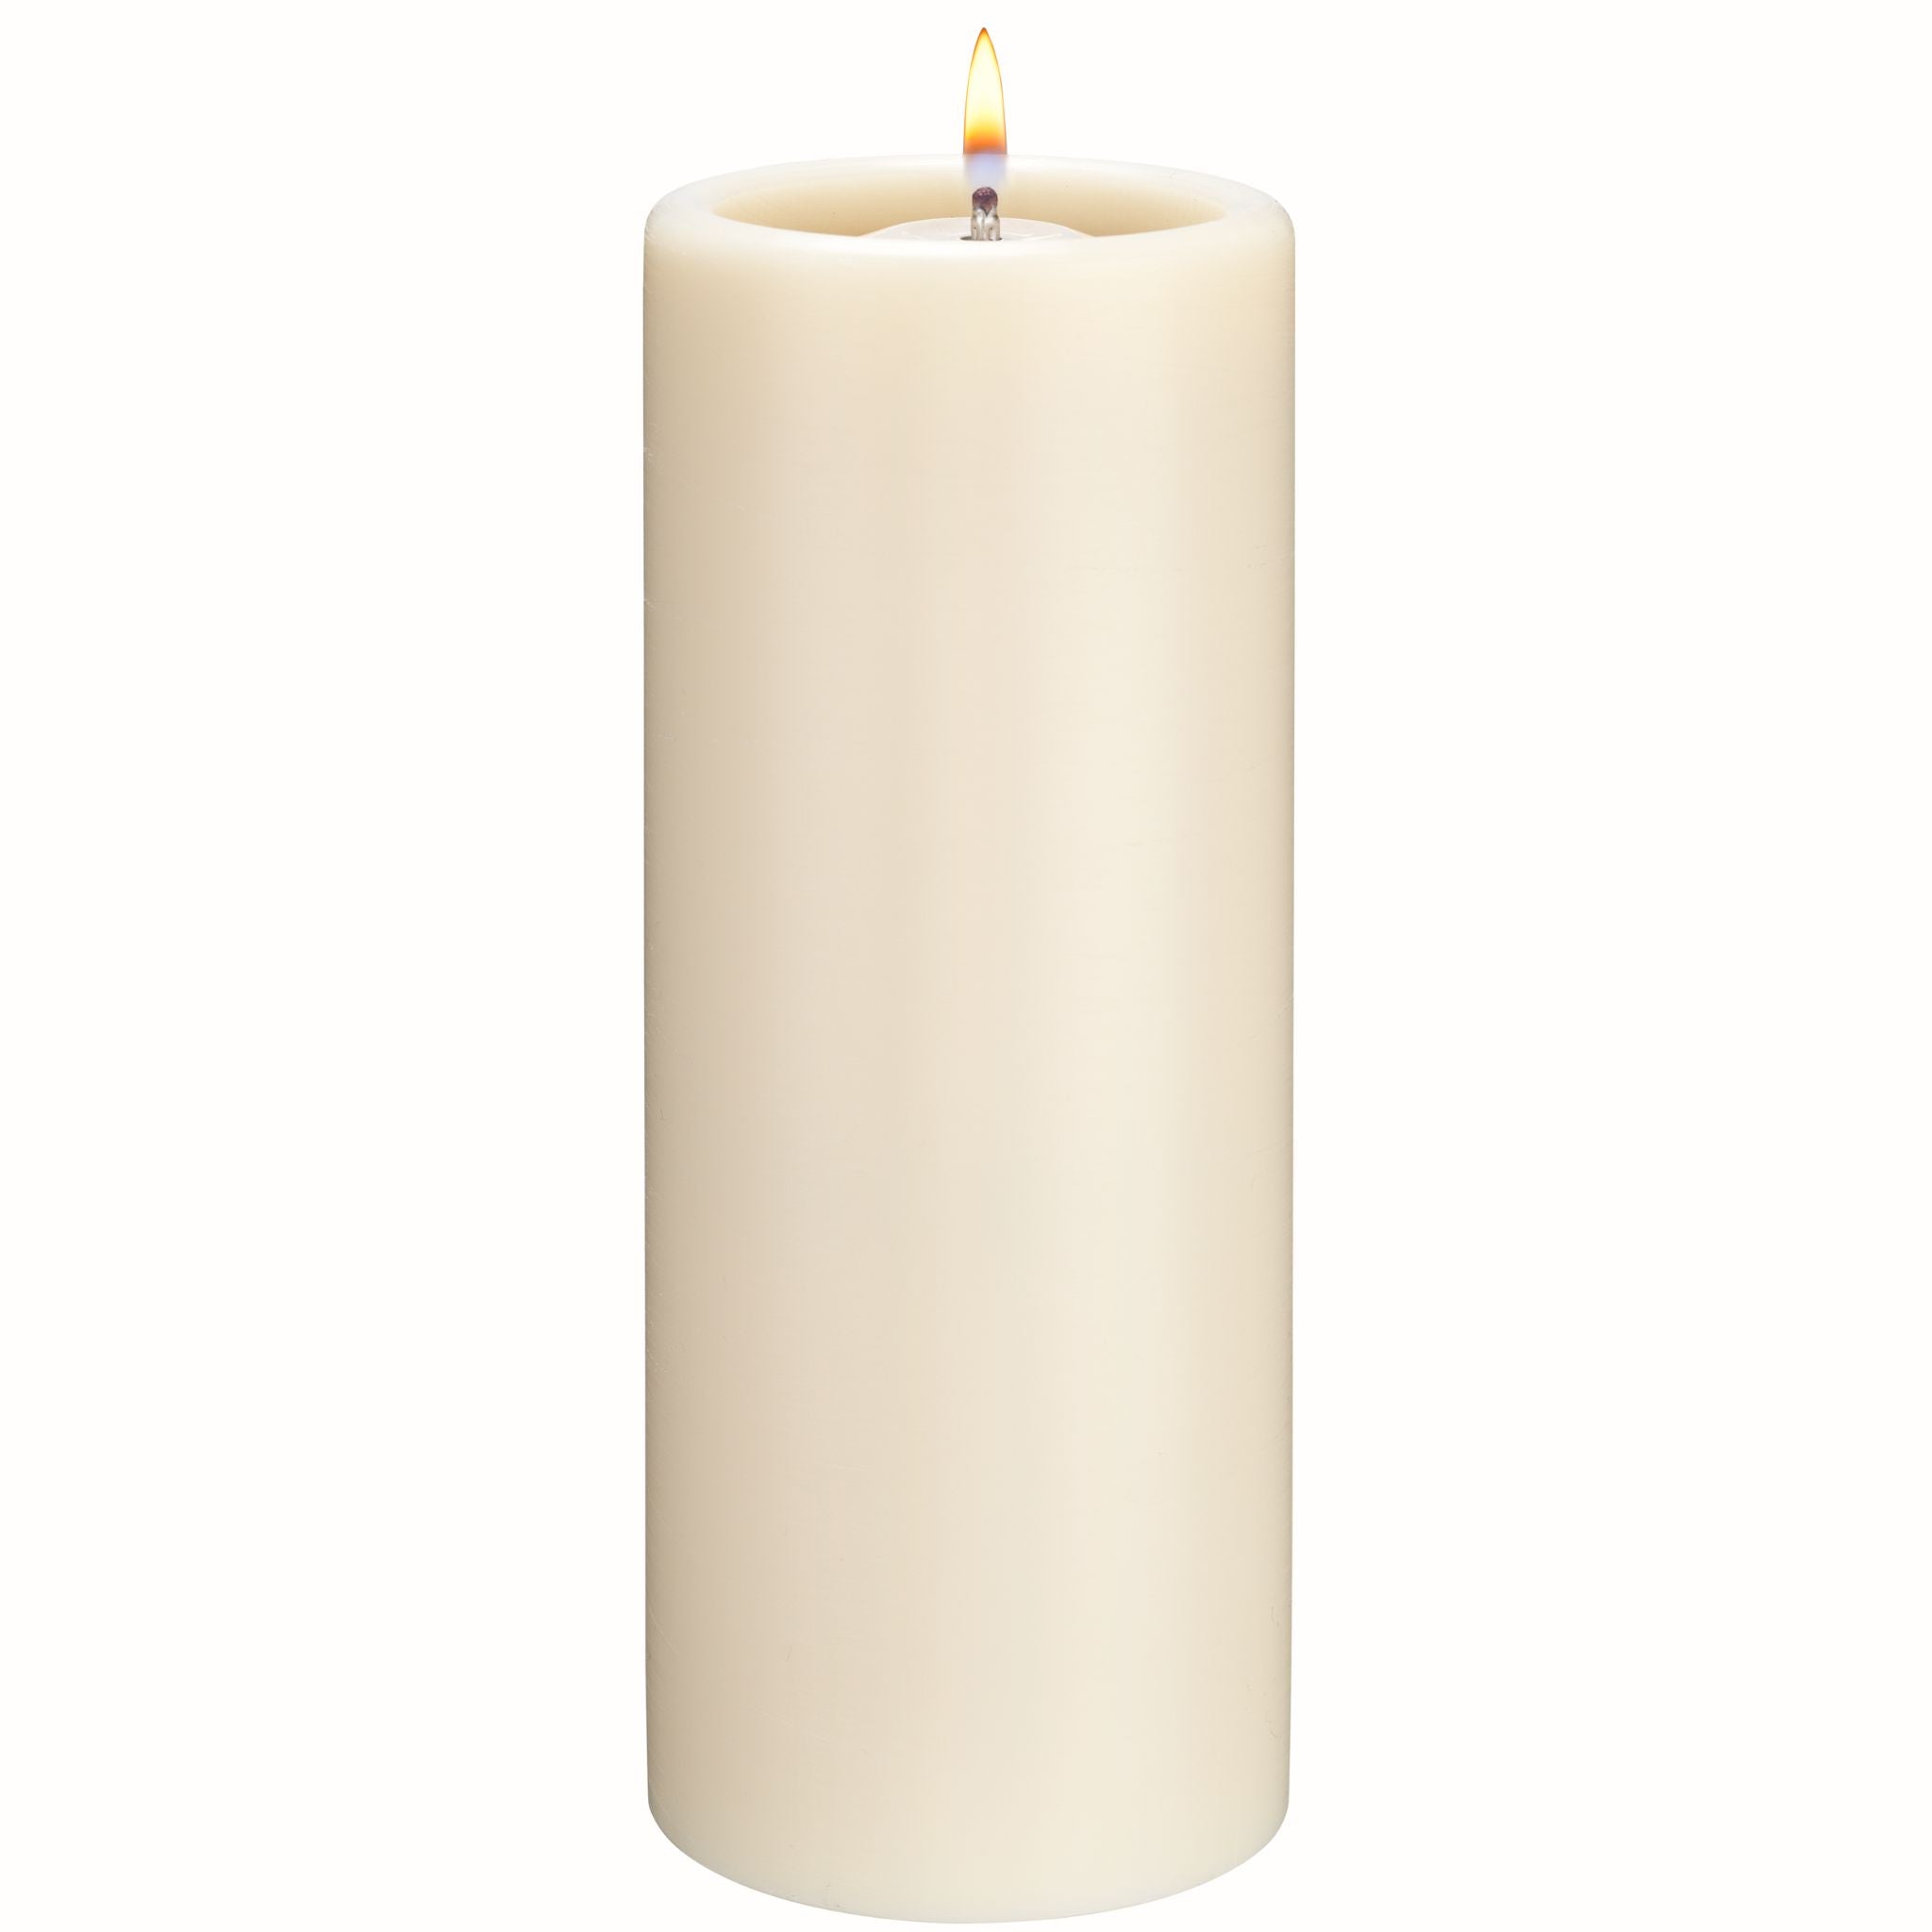 Safety candle for eternal burner 25-oS - 0